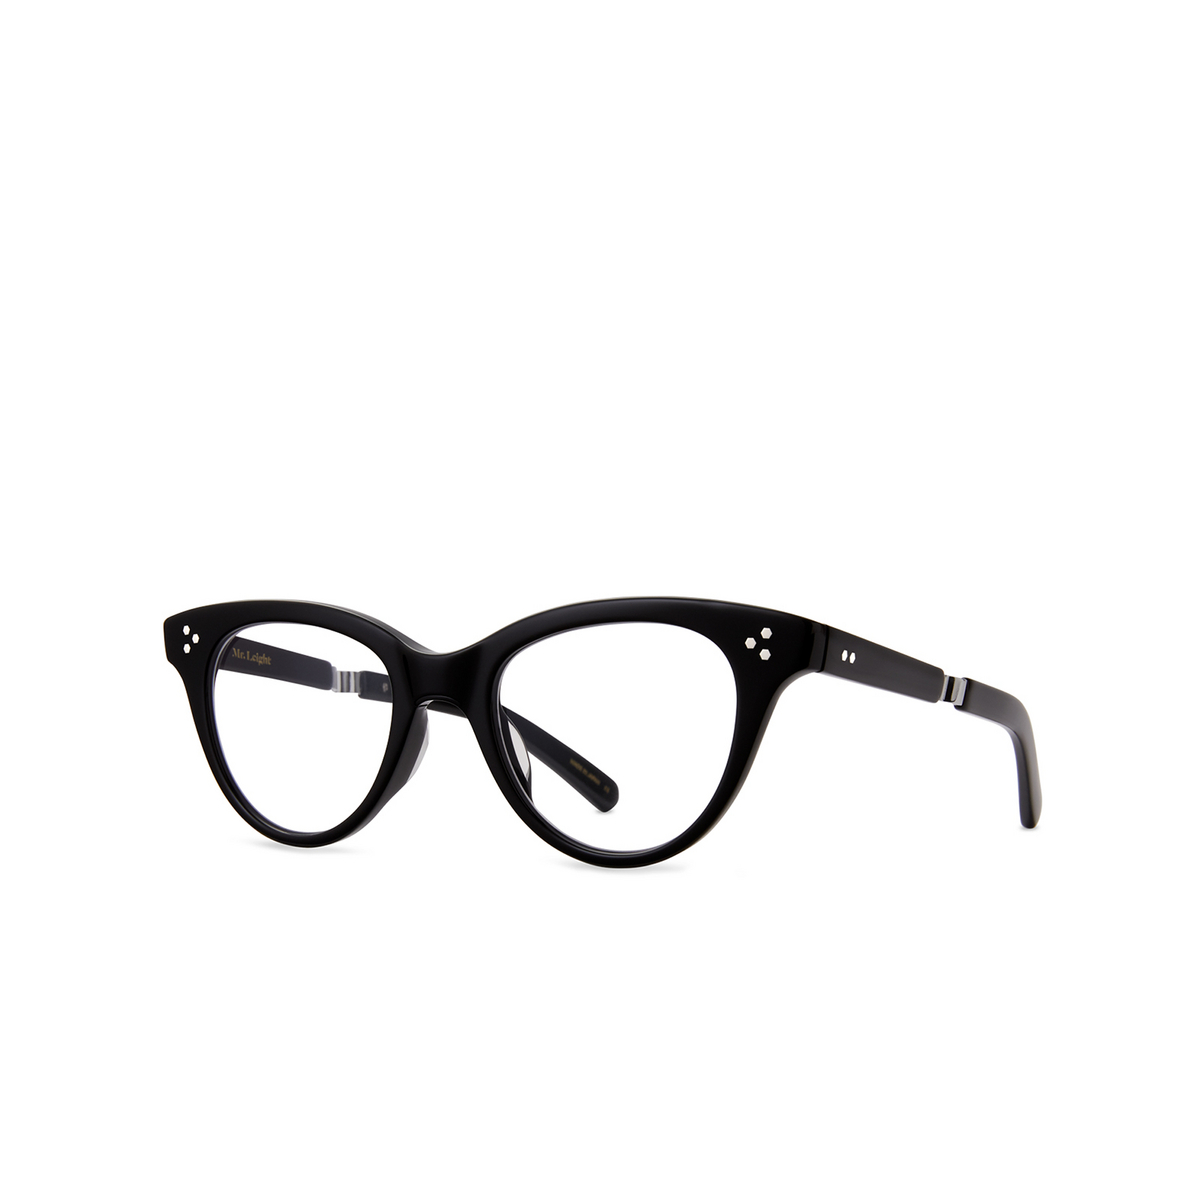 Mr. Leight KATHRYN C Eyeglasses BK-PLT Black-Platinum - three-quarters view